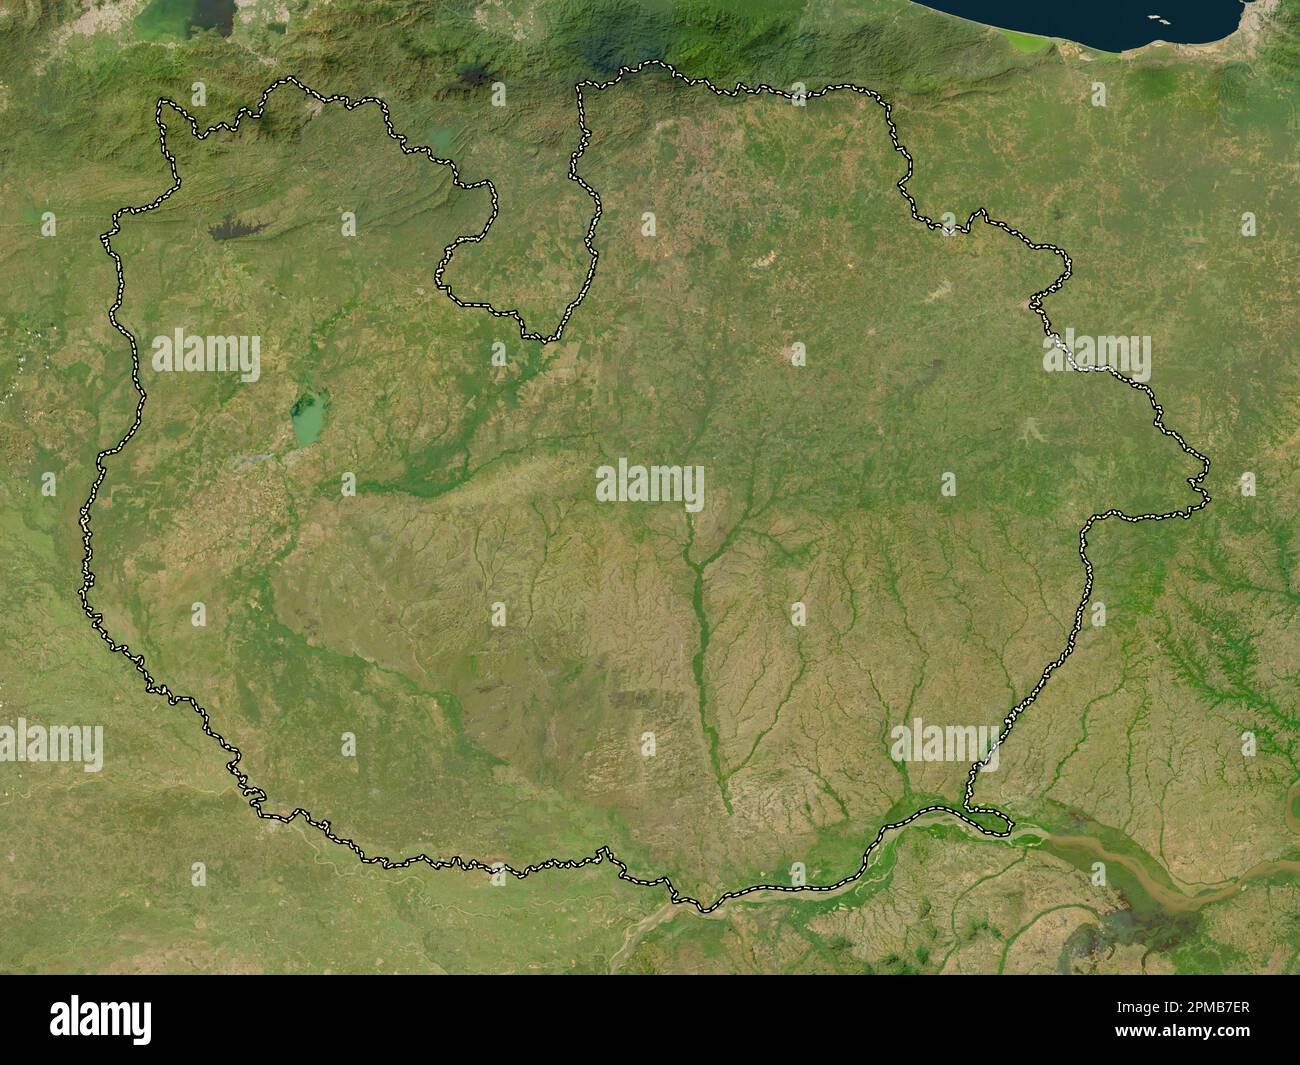 Guarico, state of Venezuela. Low resolution satellite map Stock Photo